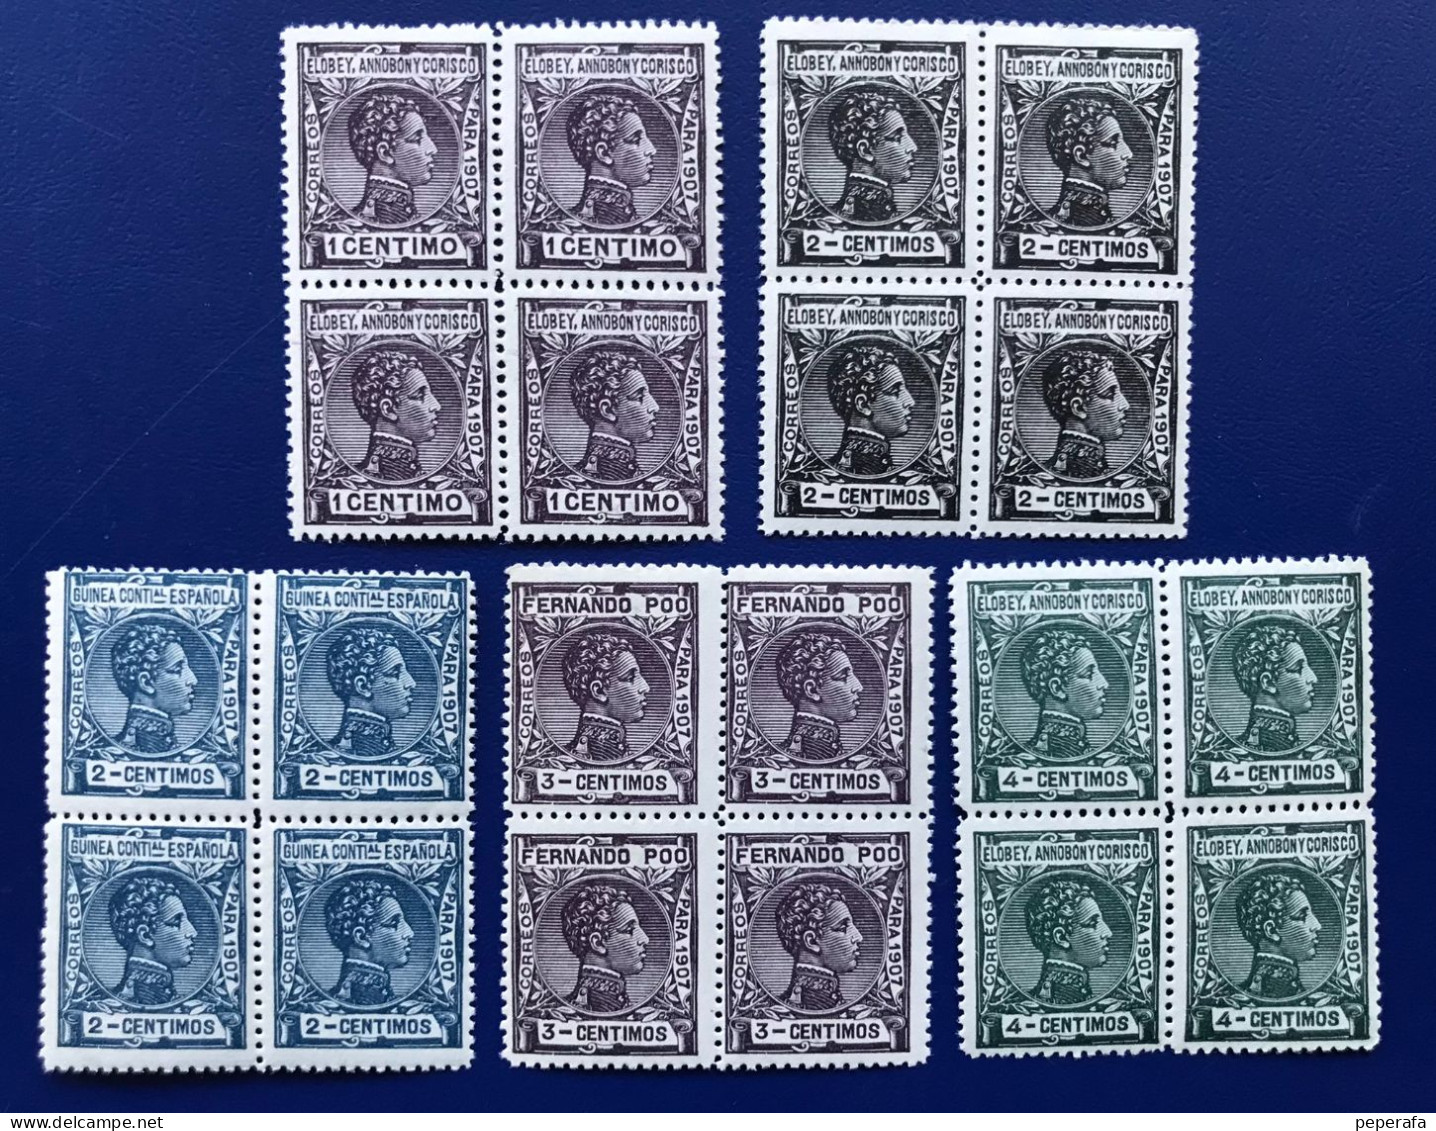 Spain, Spagne, España, GUINEA ESPAÑOLA, GOLFO DE GUINEA 1909, 5 BLOQUE DE 4 SELLOS NUEVOS - Guinea Espagnole